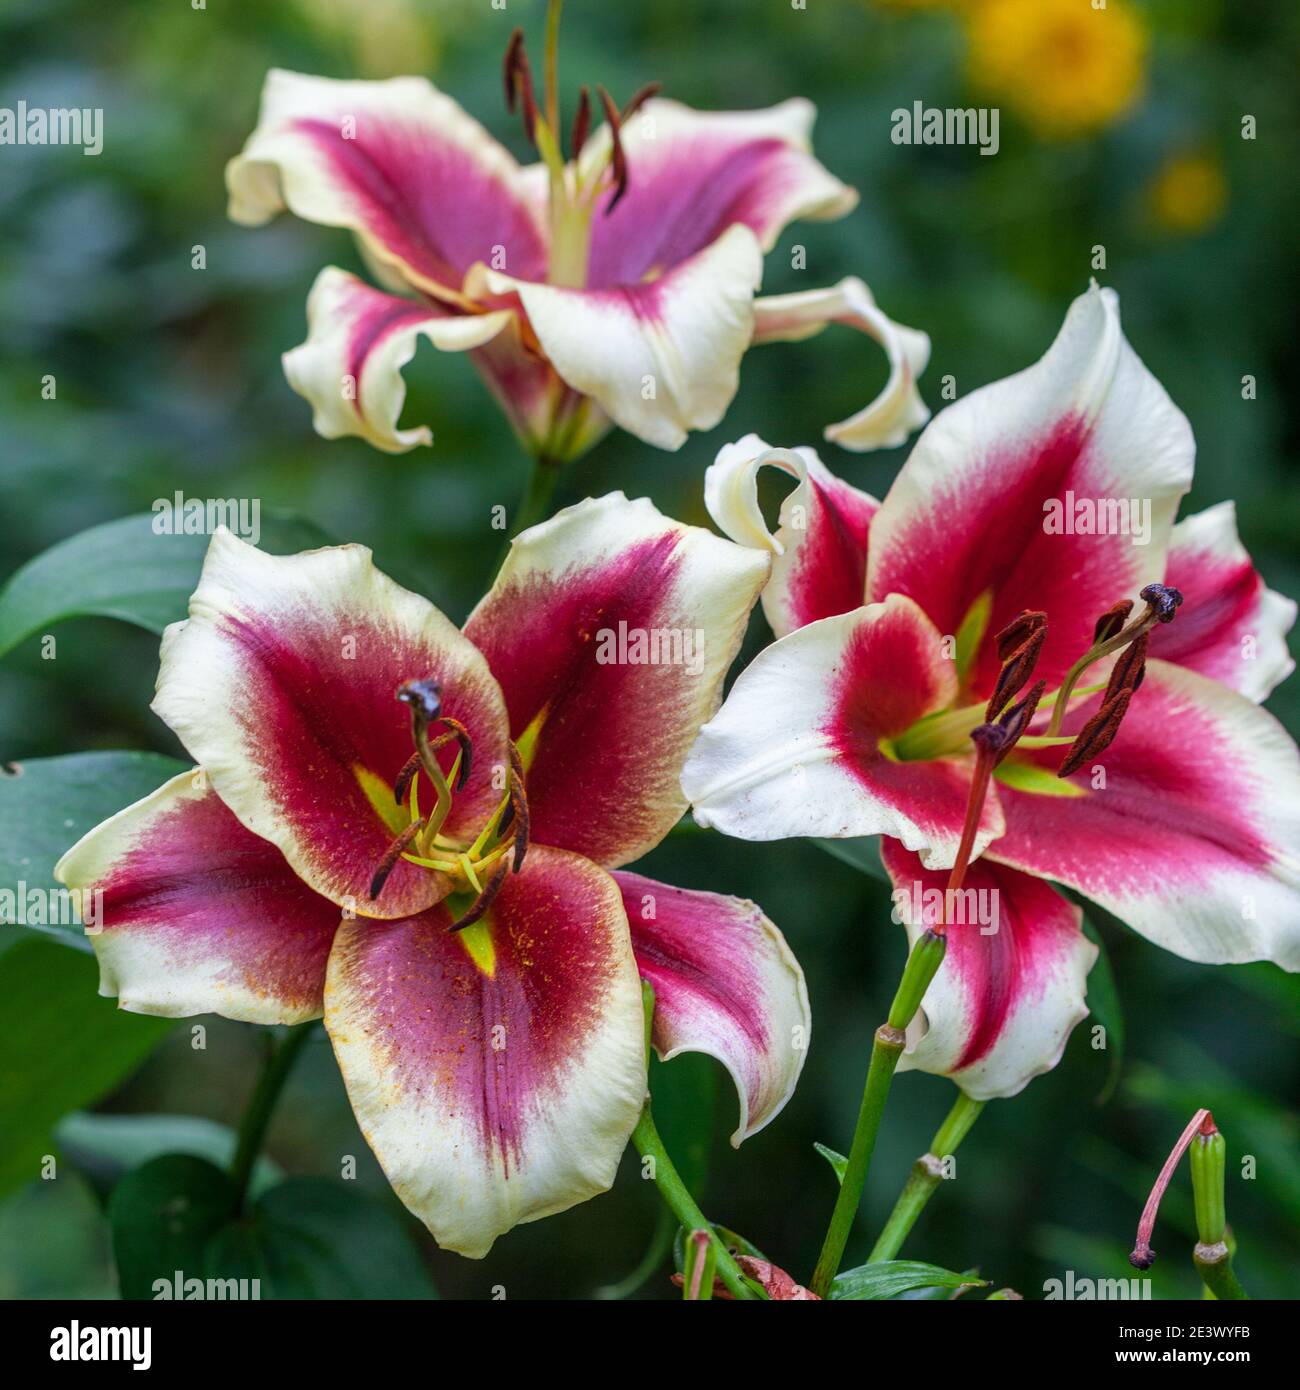 Garden lilys pleasure Lilys Pleasure